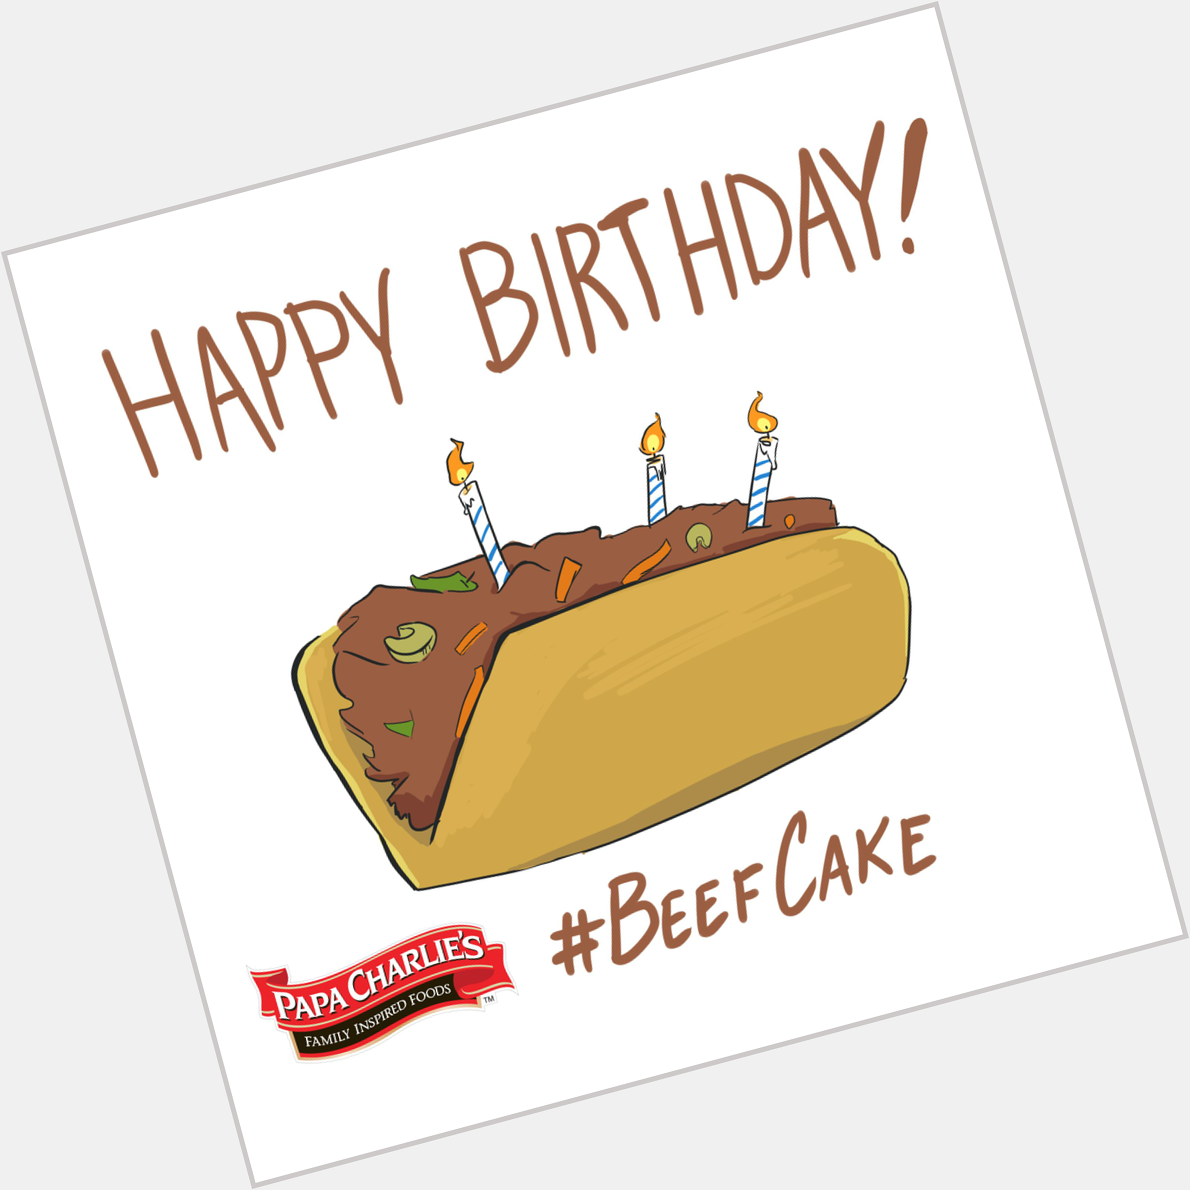 Happy birthday to the beautiful Geena Davis! What\s your favorite Geena Davis film? 